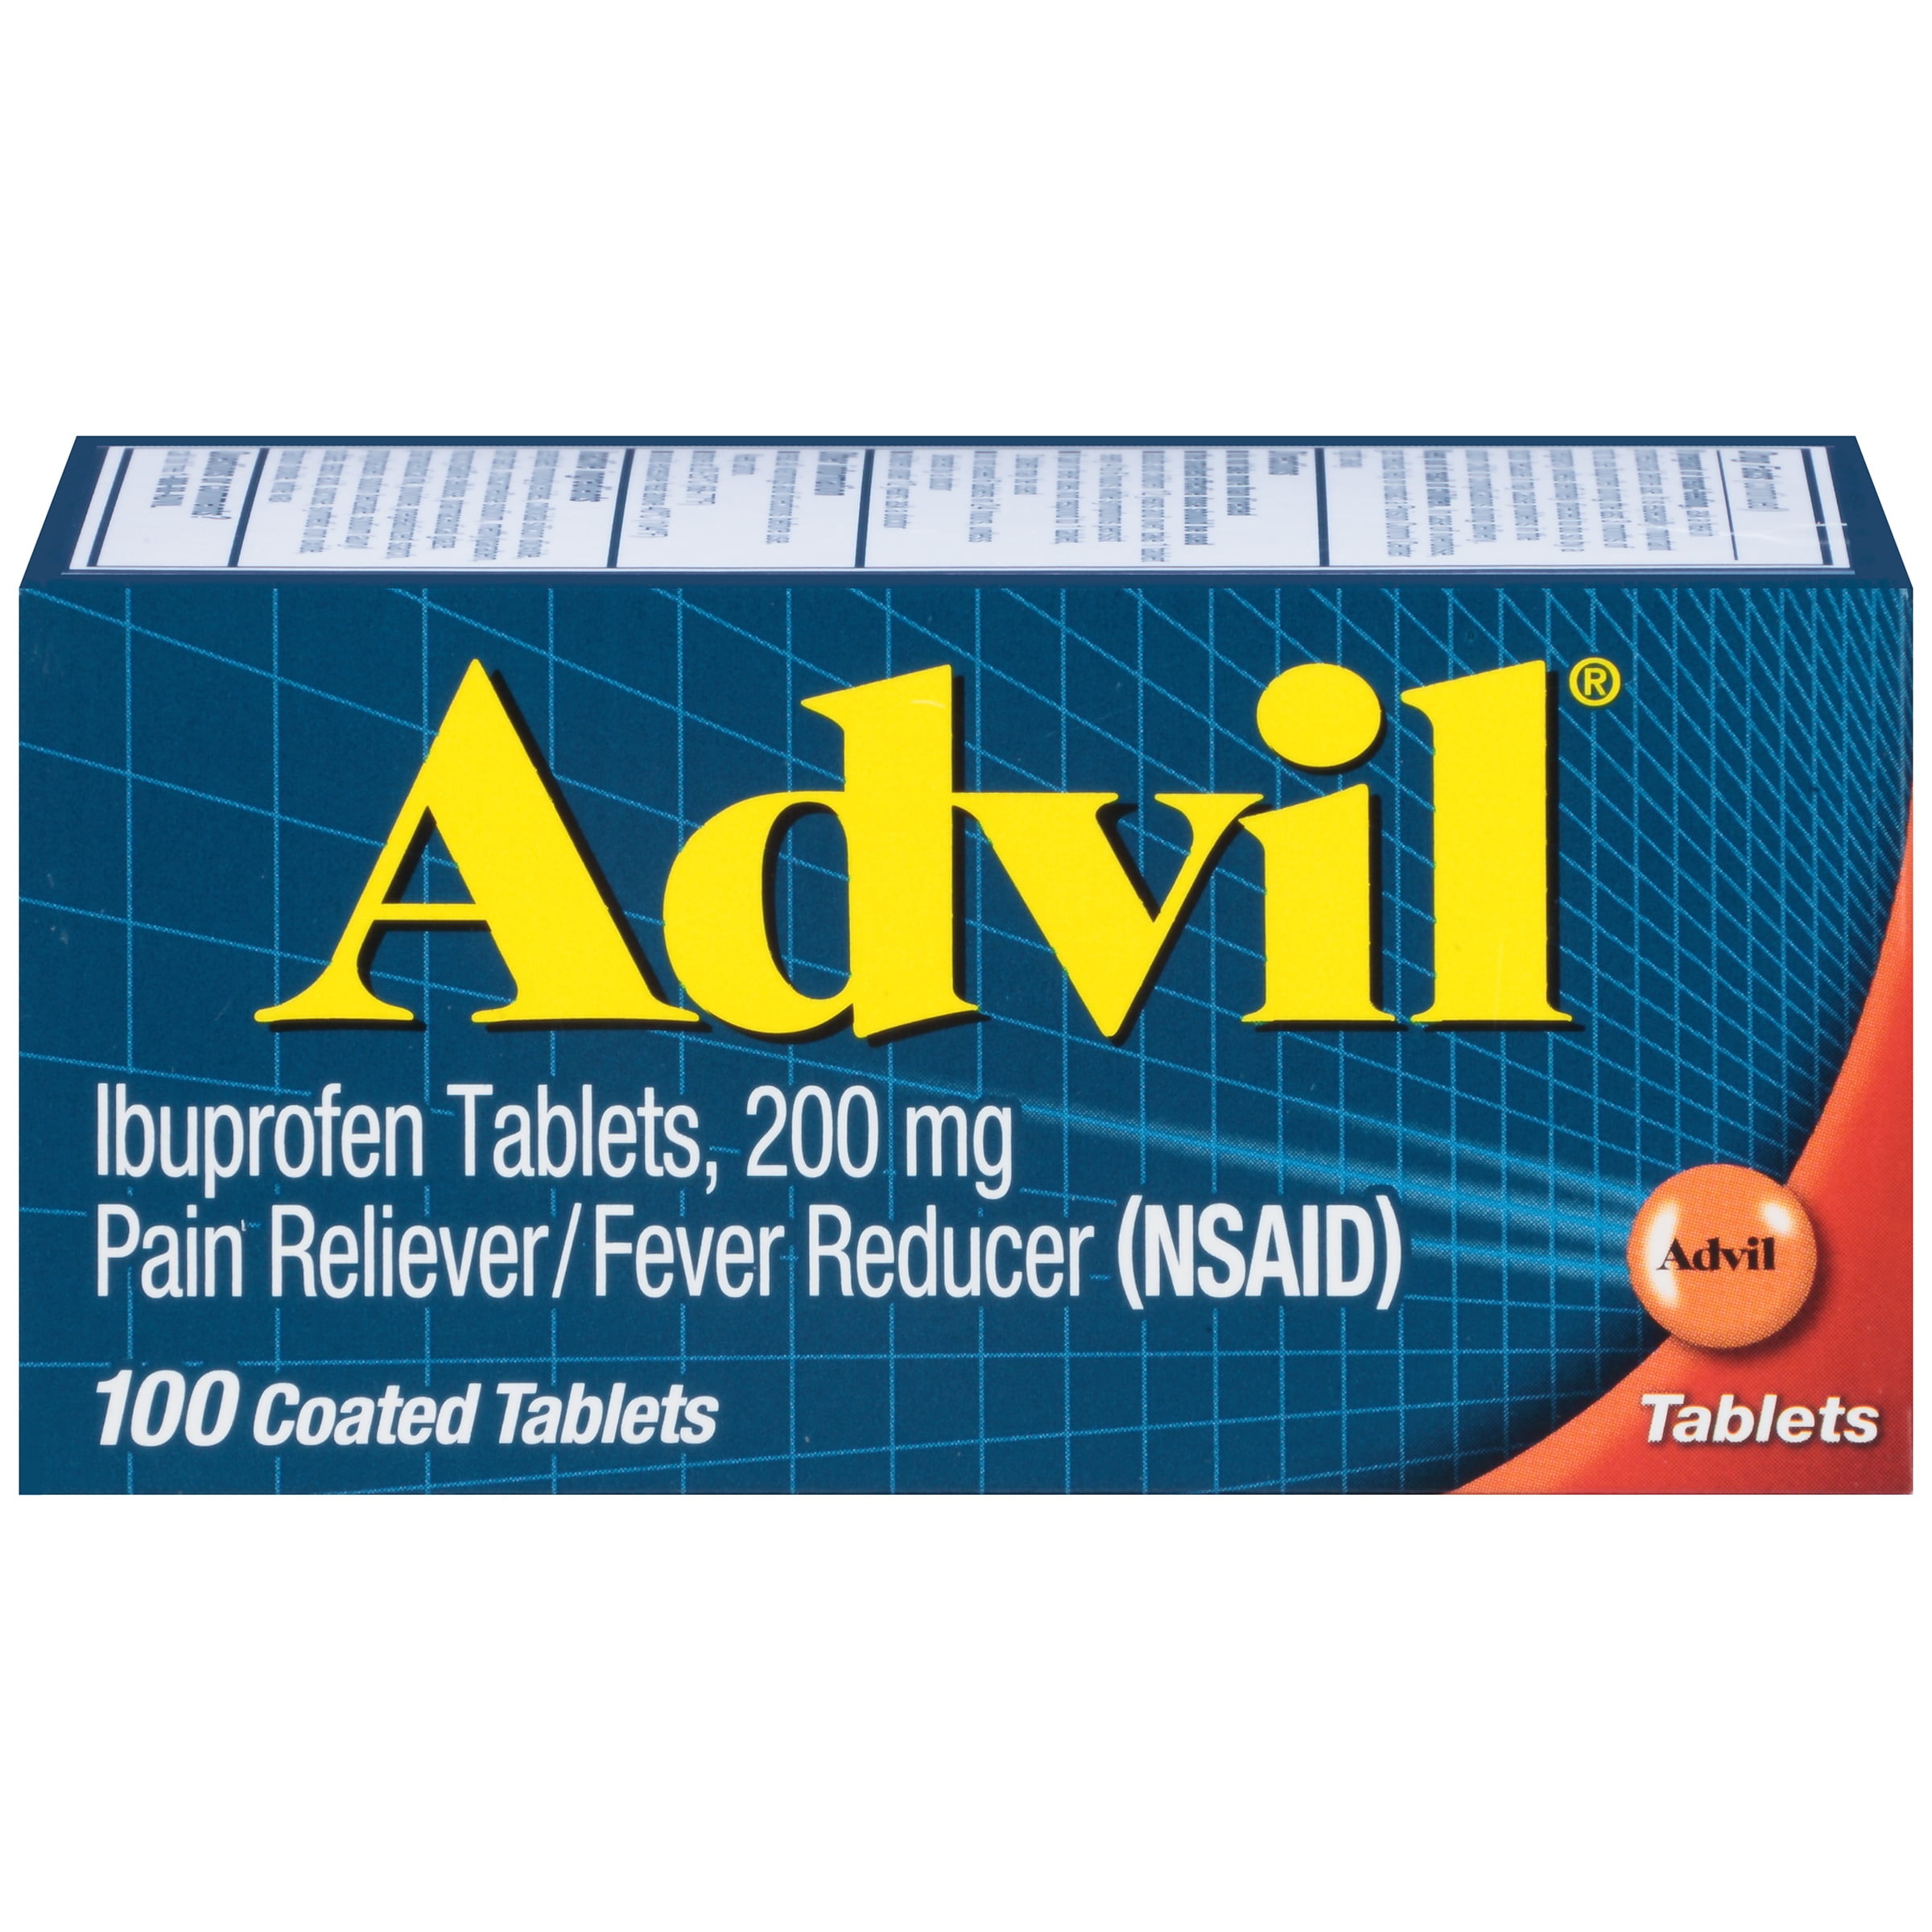 Advil Mail In Rebate